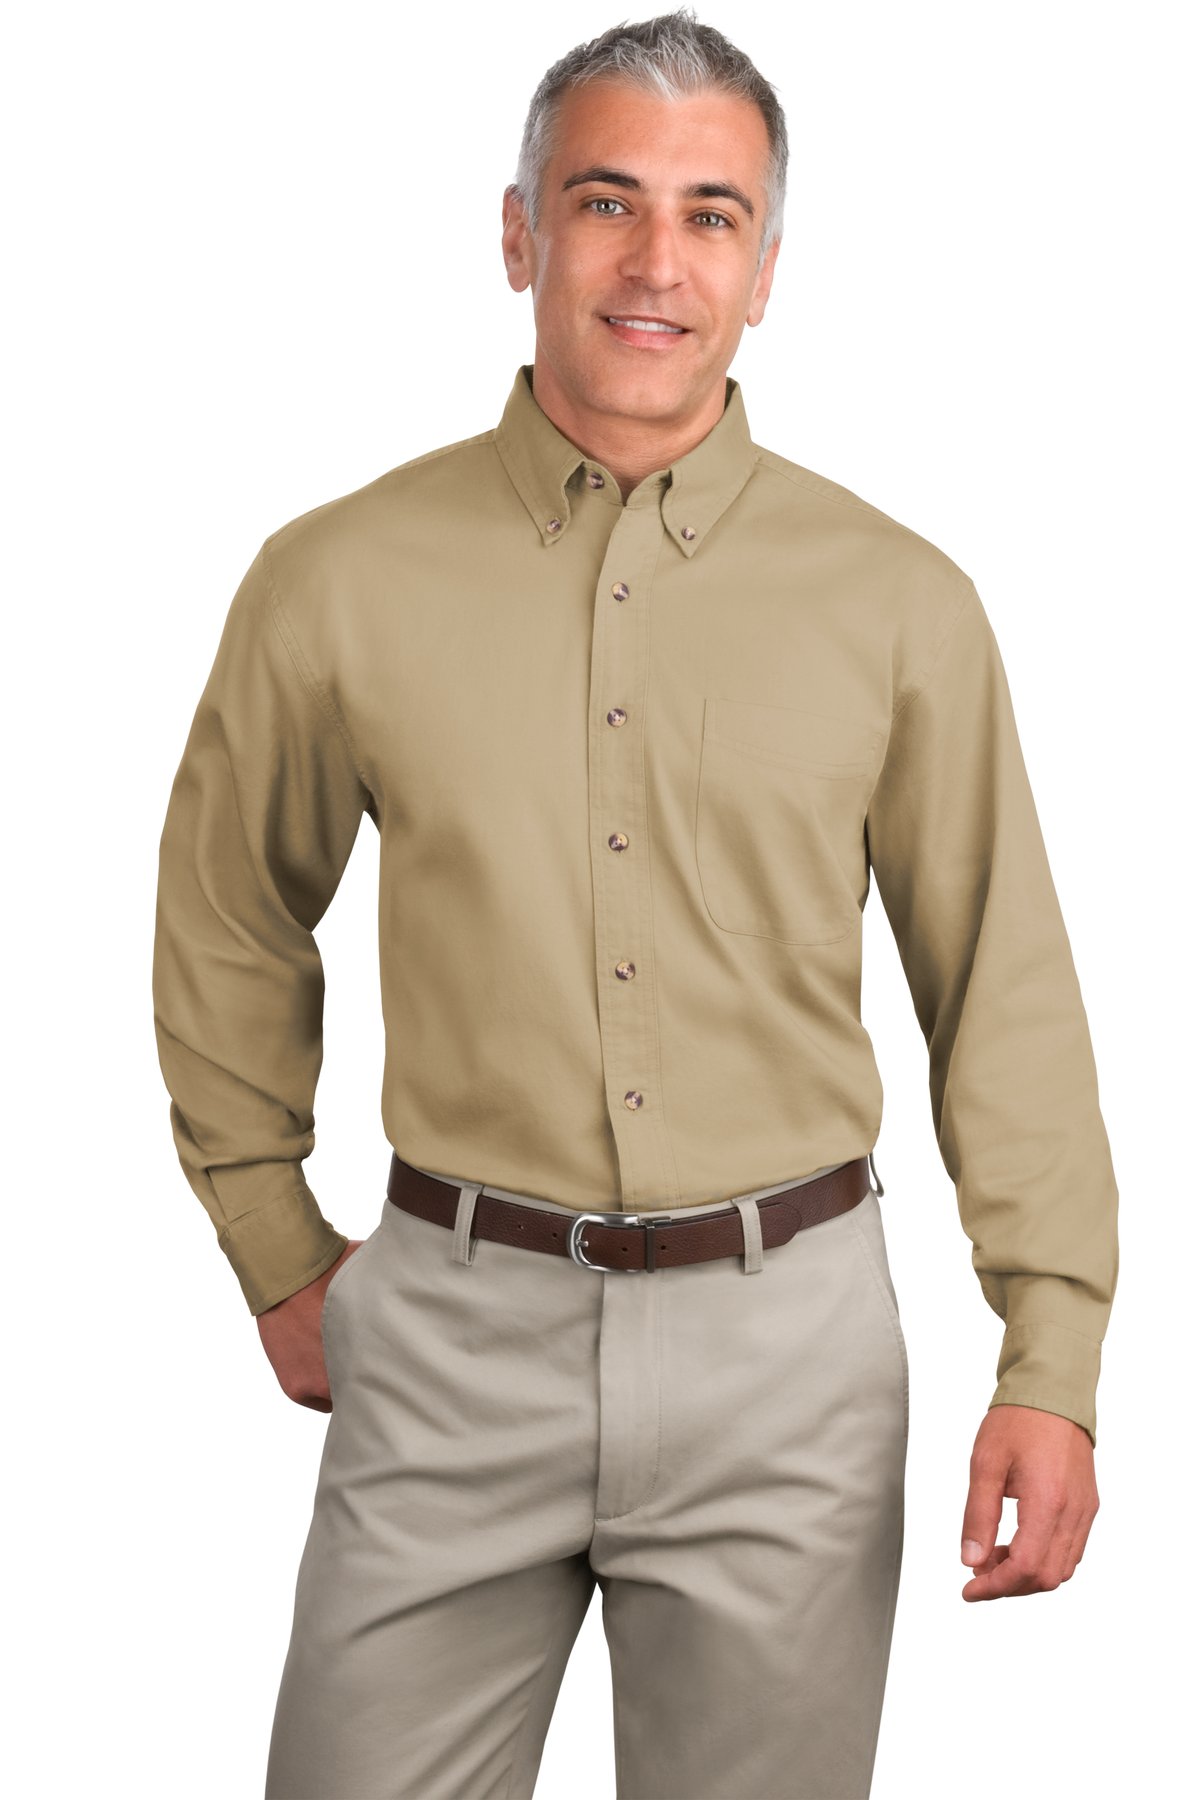 Port Authority Tall Long Sleeve Twill Shirt.  TLS600T